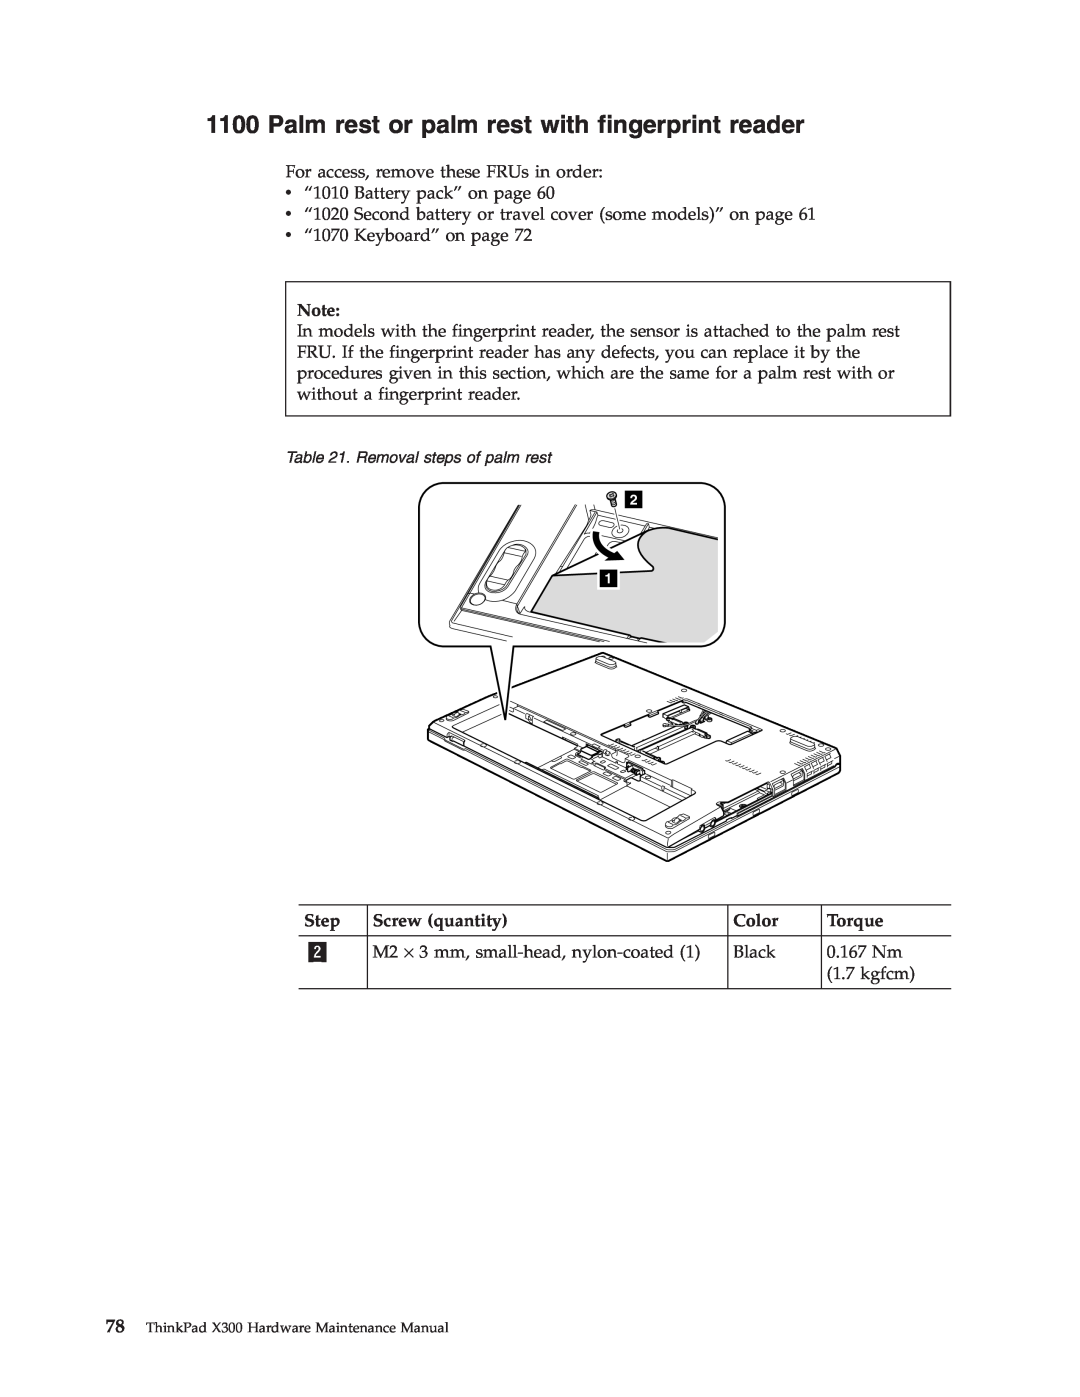 Lenovo X300 manual Palm rest or palm rest with fingerprint reader, Step, Screw quantity, Color, Torque 